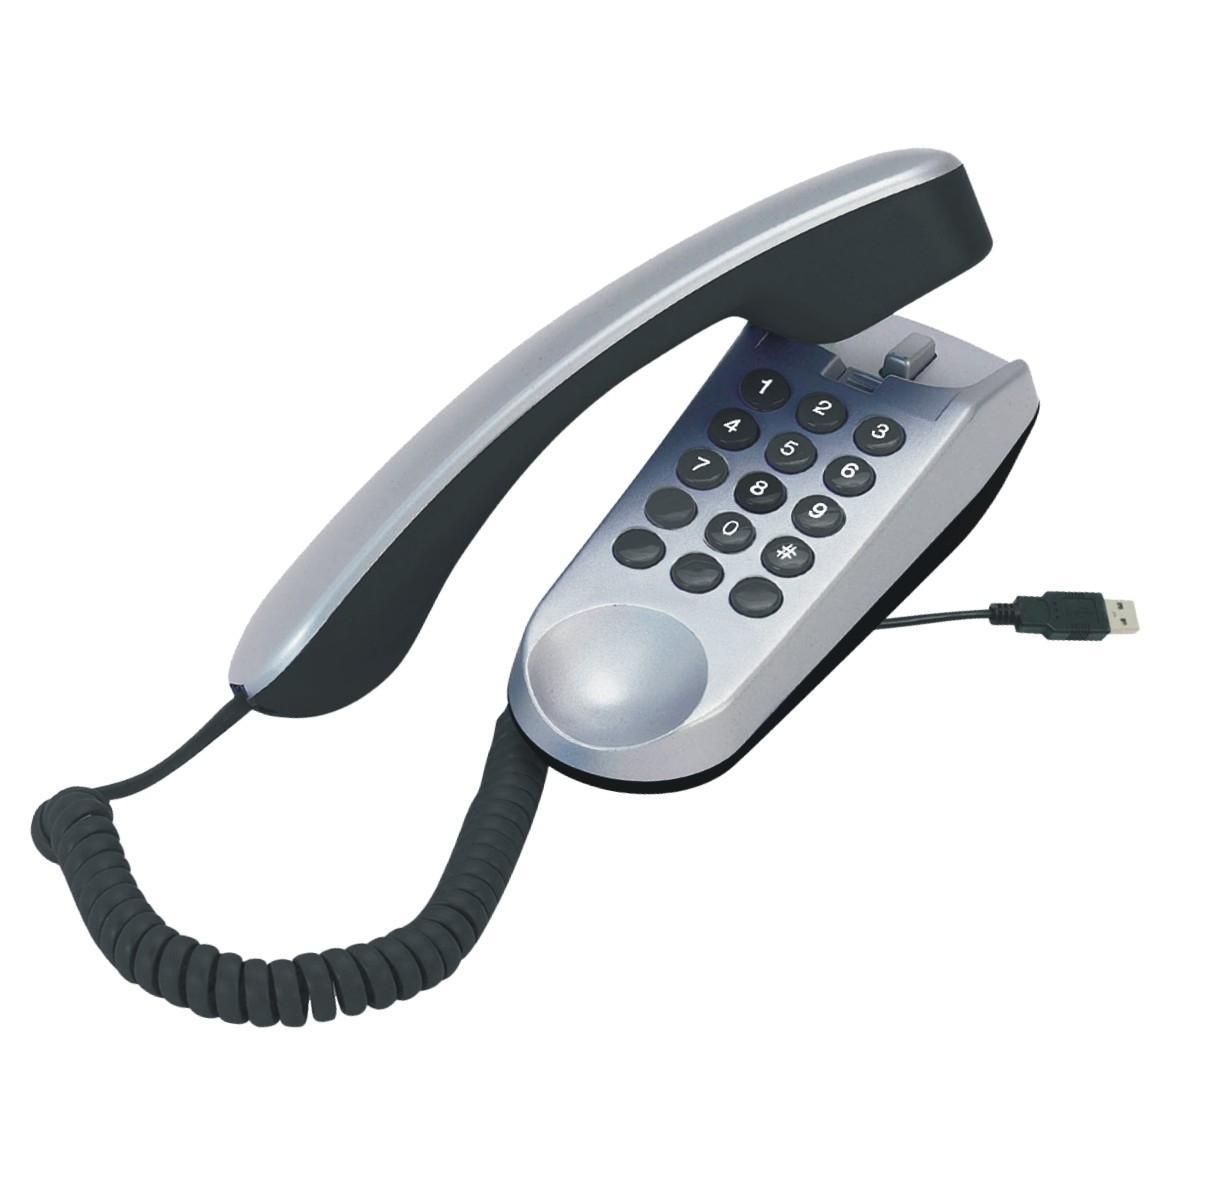 FREE USB VoIP Phone